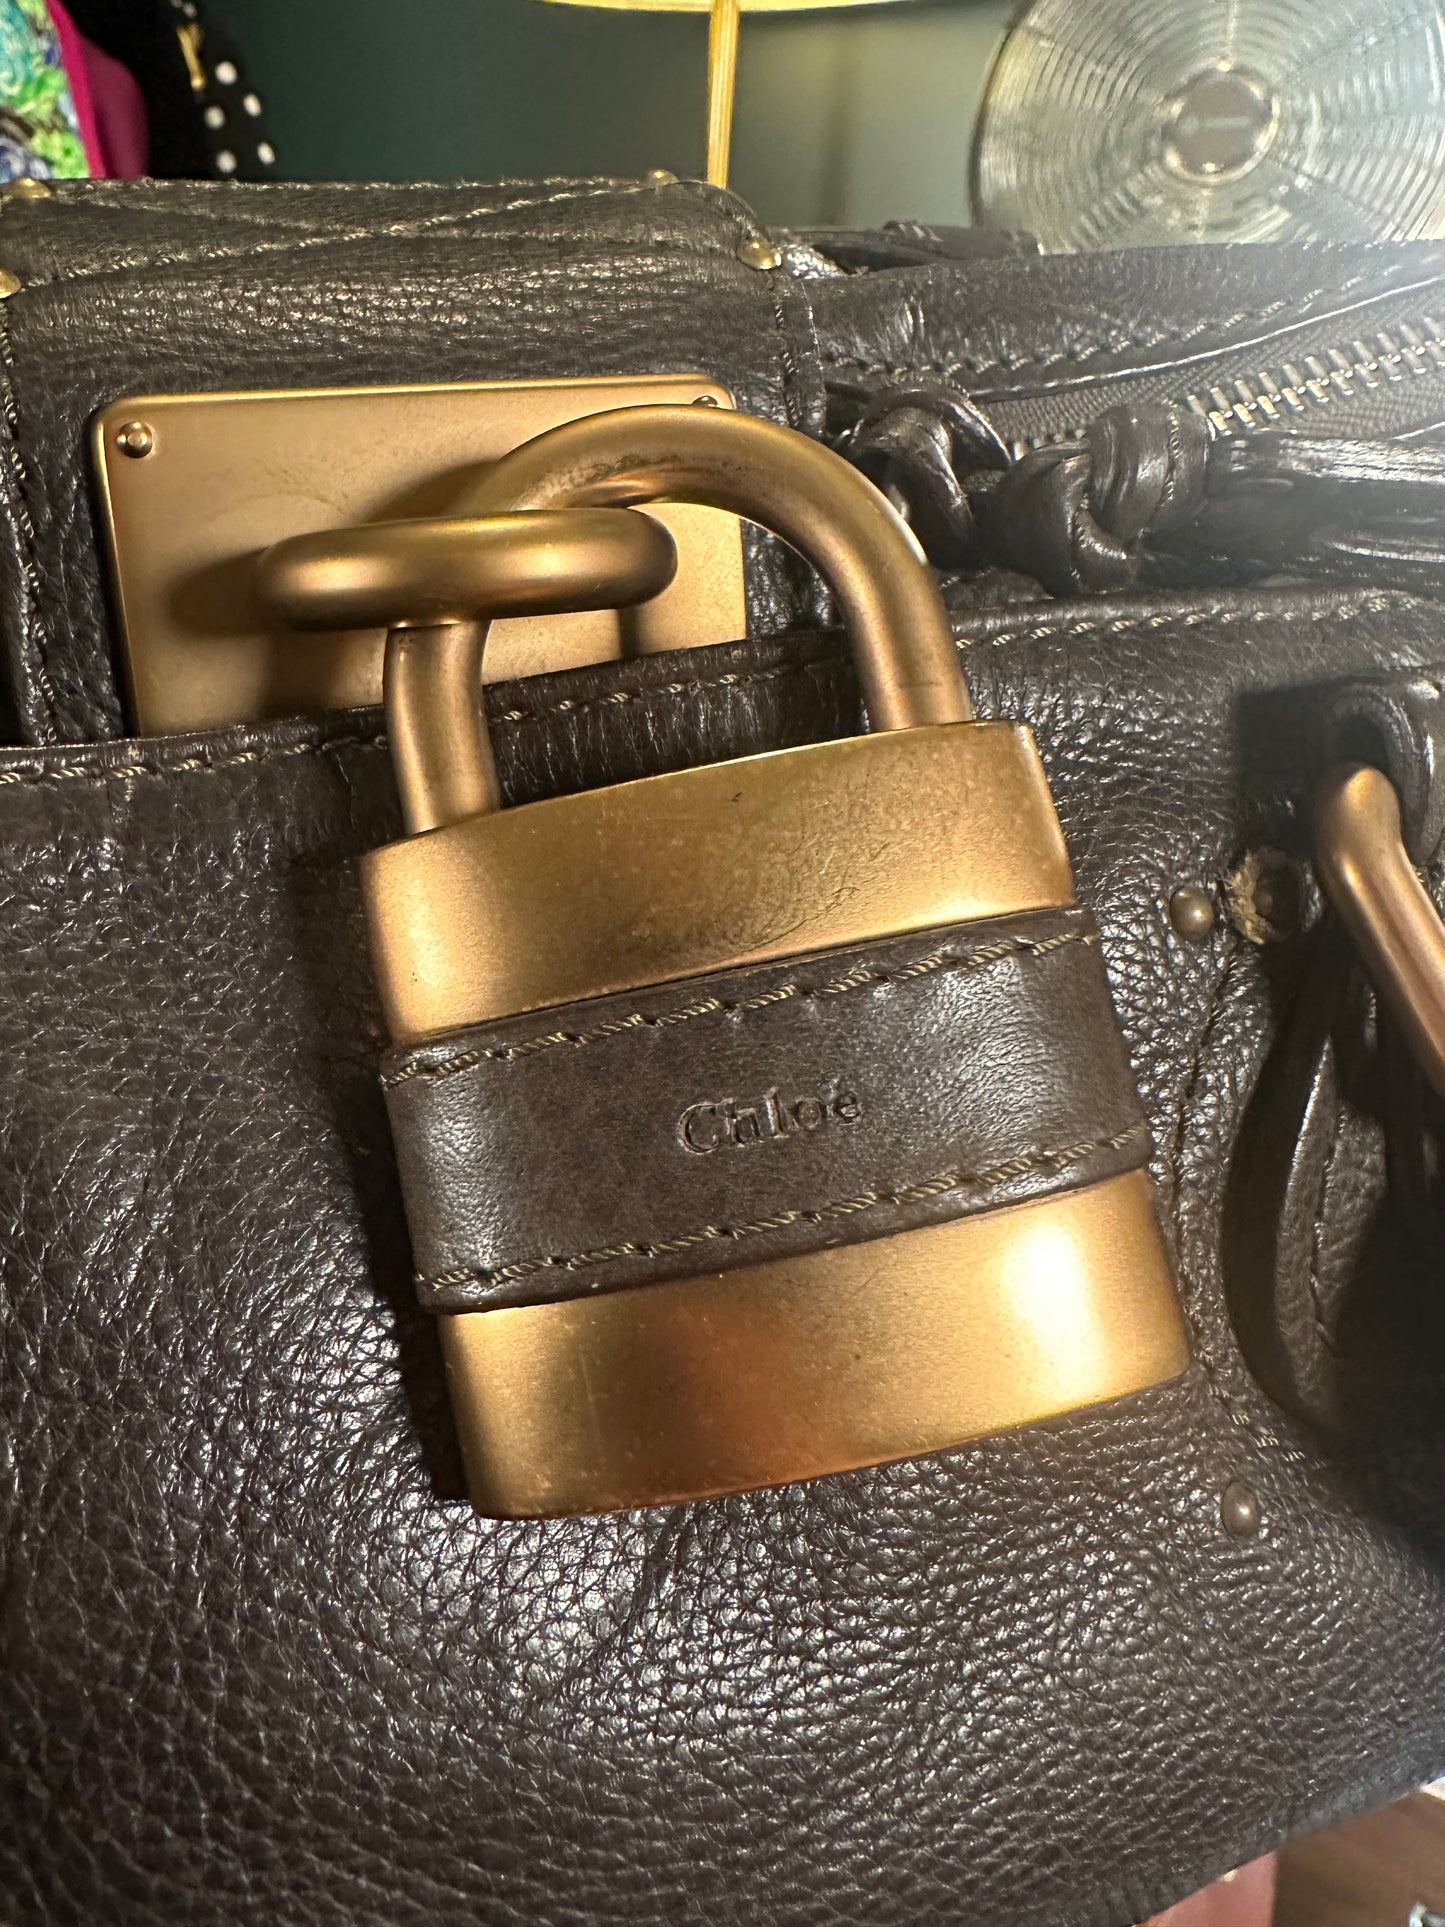 CHLOE Vintage 100% Authentic Genuine Paddington Handbag, Grey, Great Condition